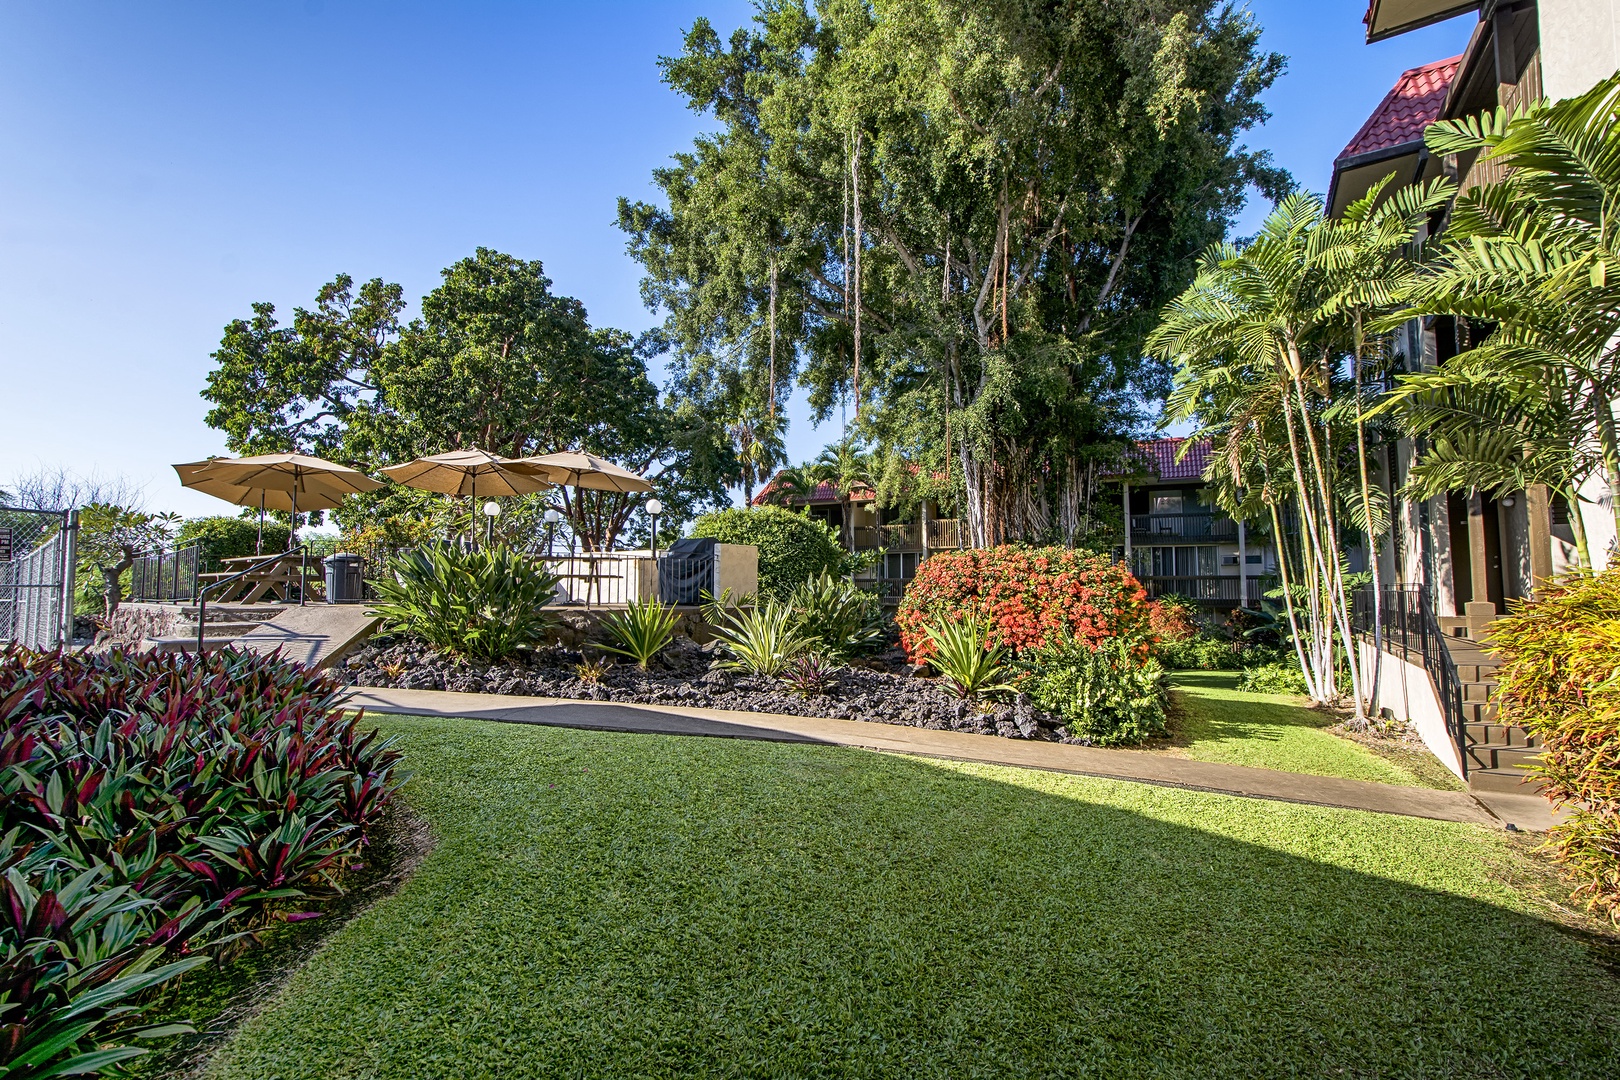 Kailua-Kona Vacation Rentals, Kona Mansions D231 - Common area surrounding the pool